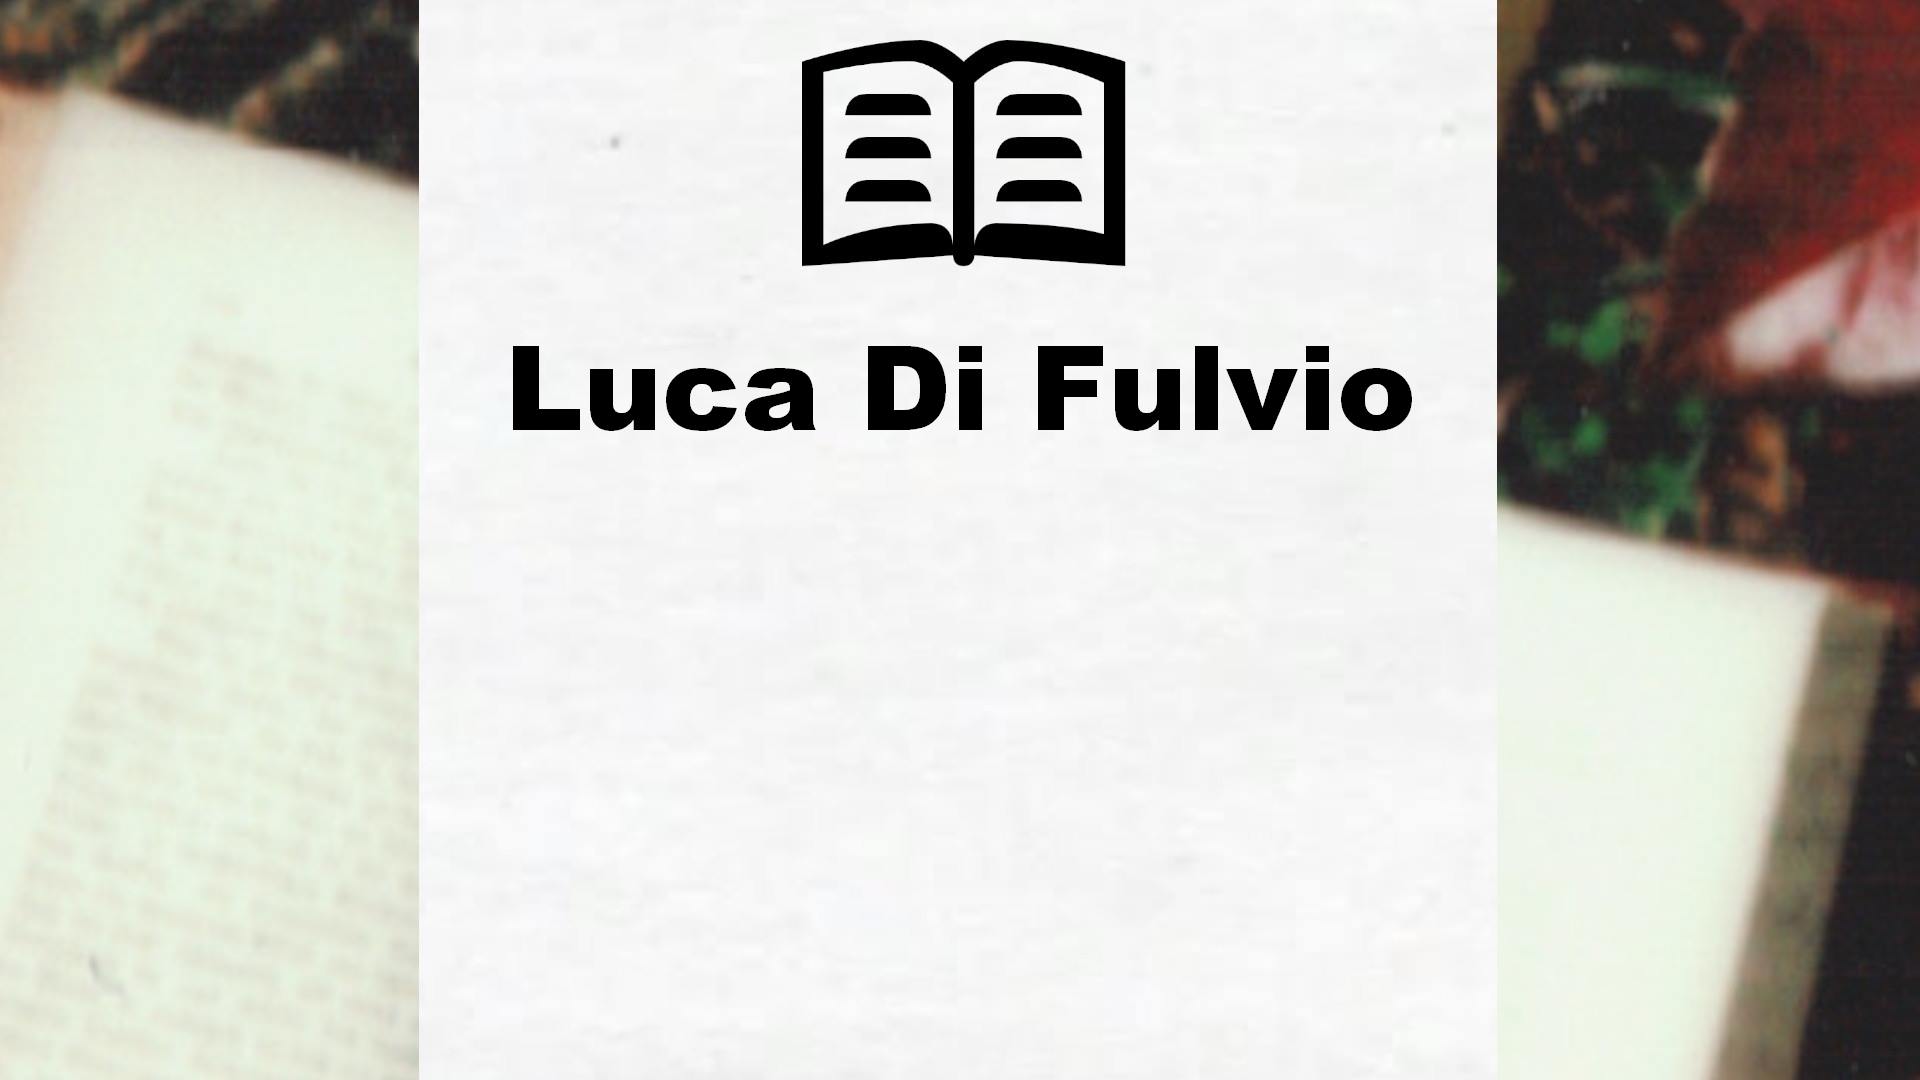 Livres de Luca Di Fulvio